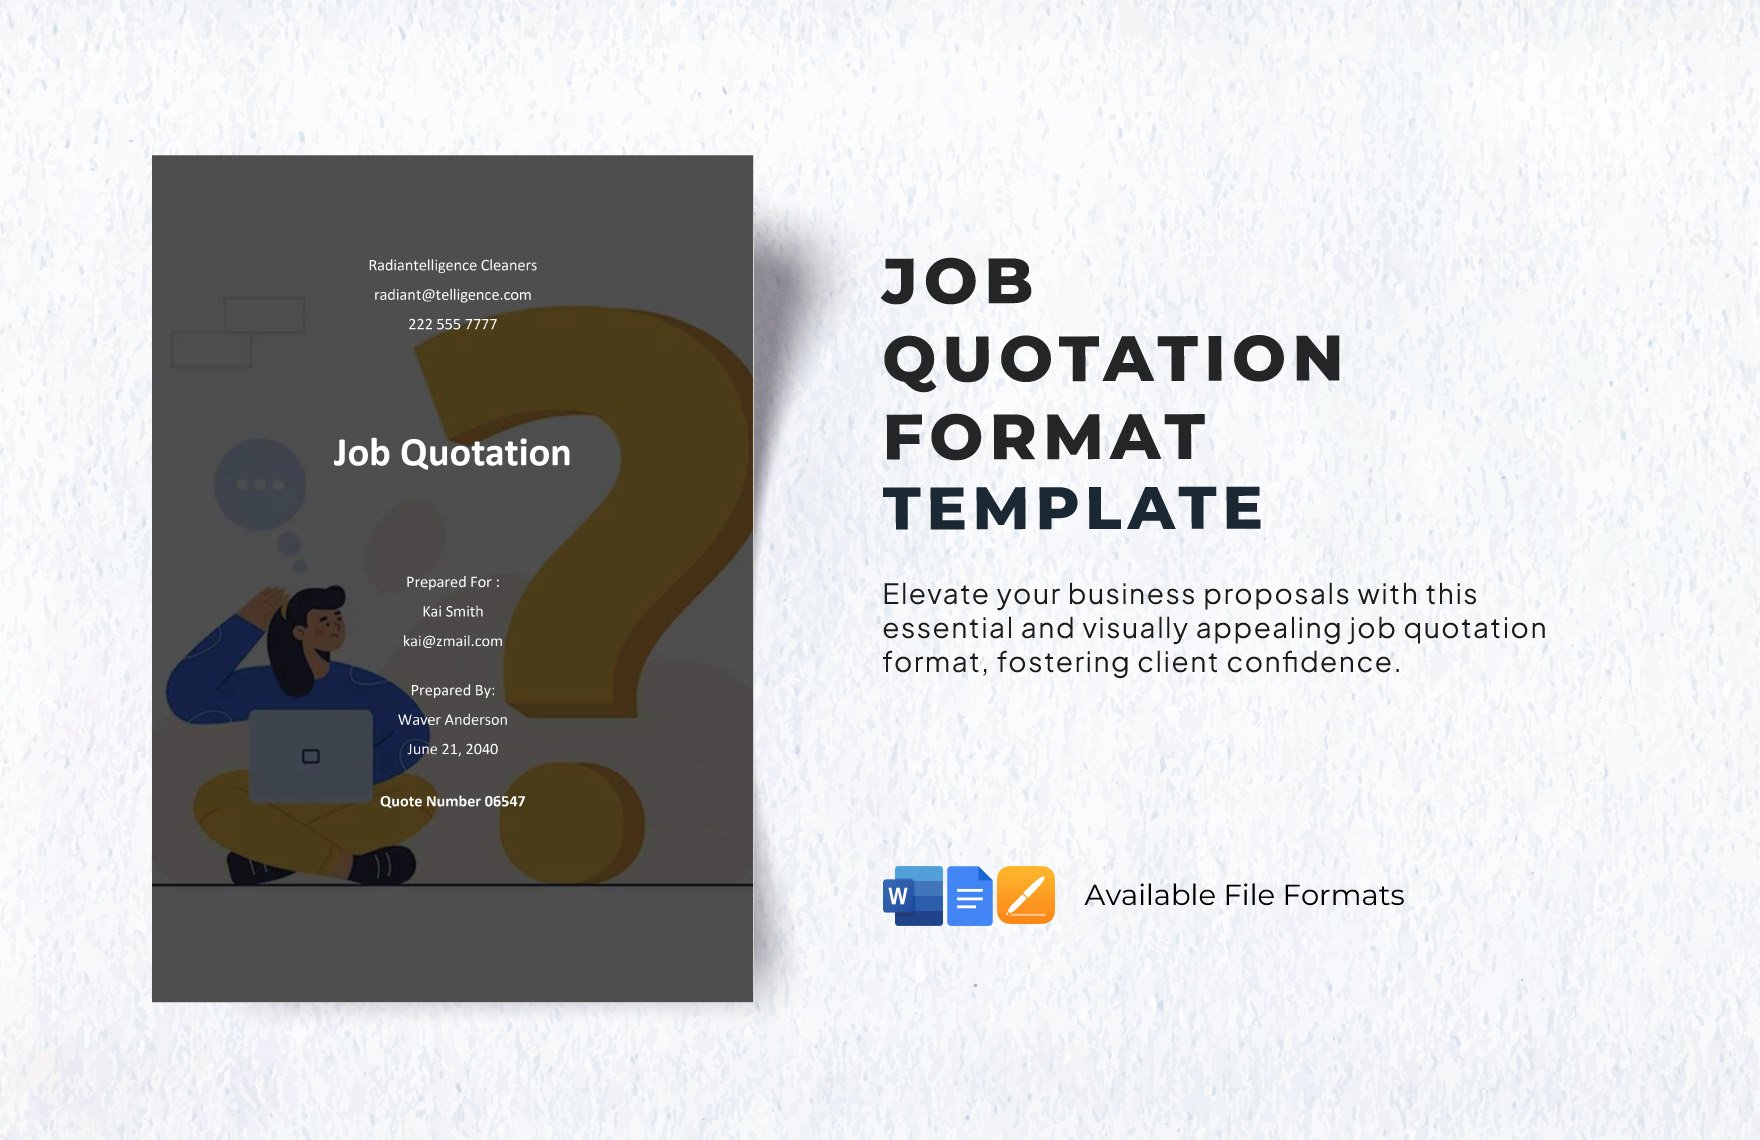 Job Quotation Format Template